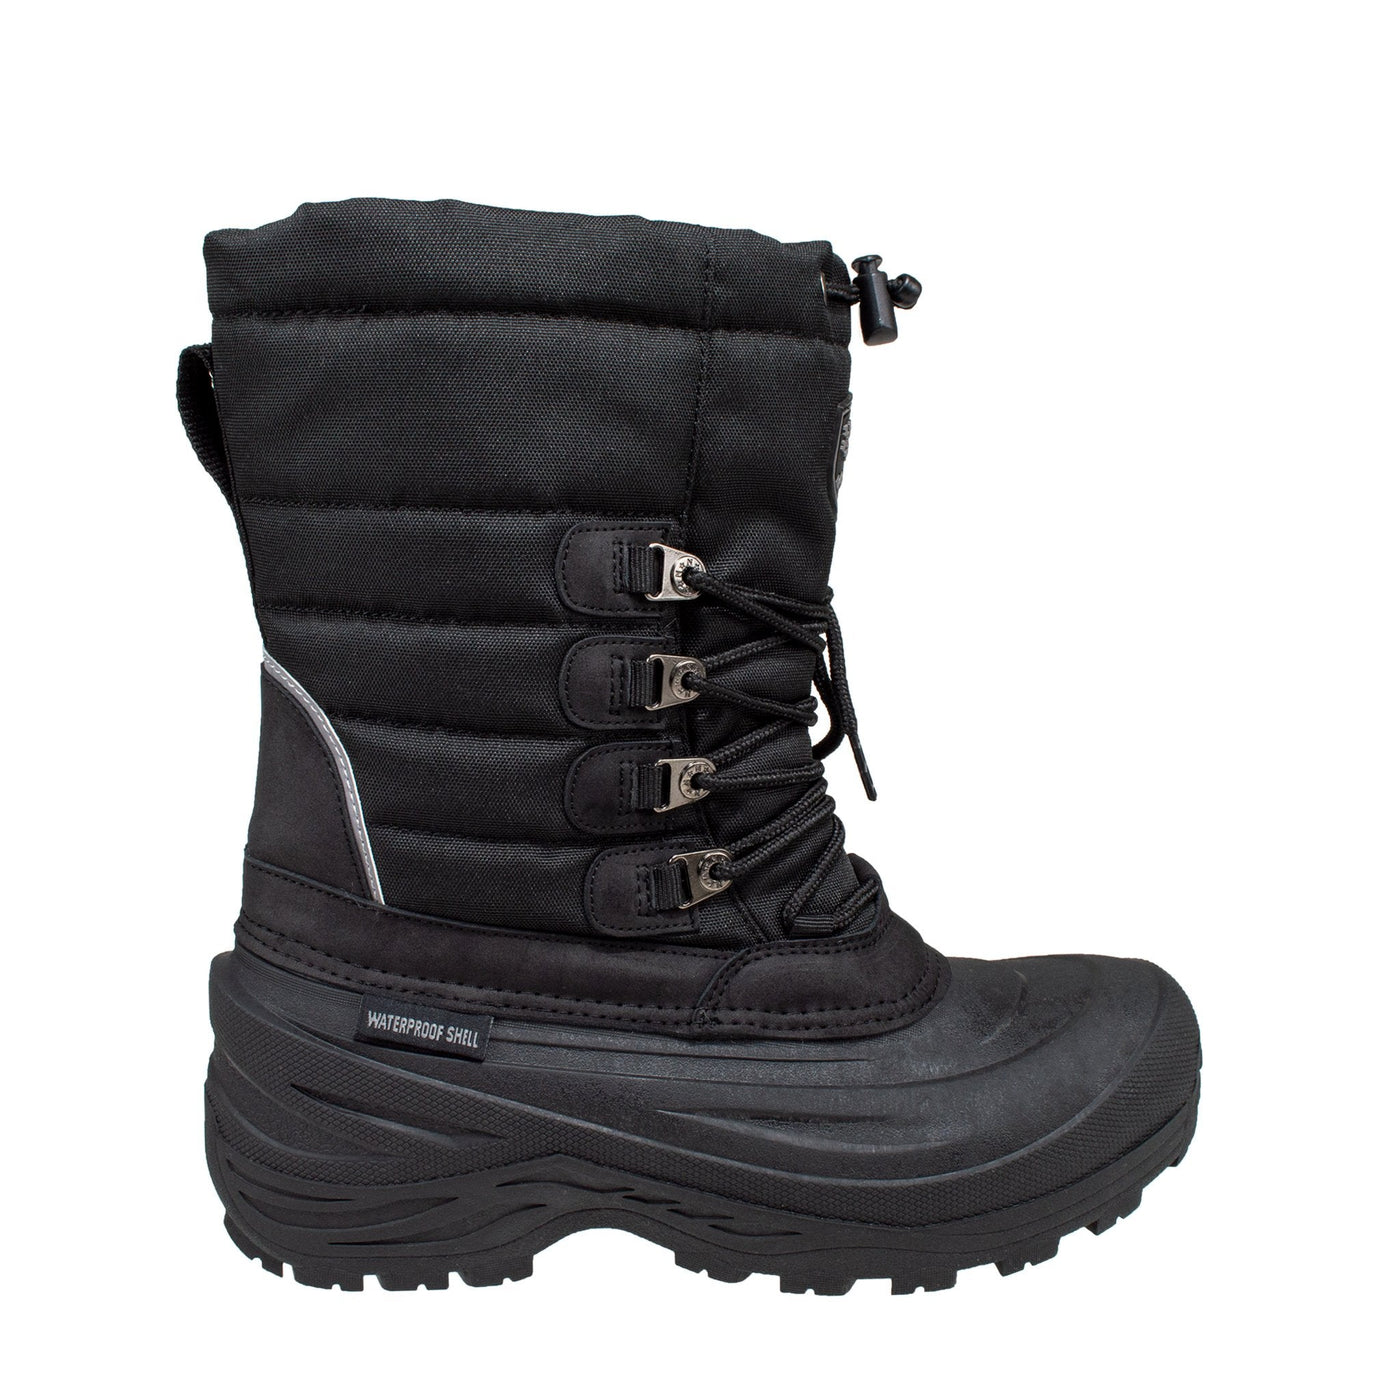 black insulated anti-slip men's winter boots